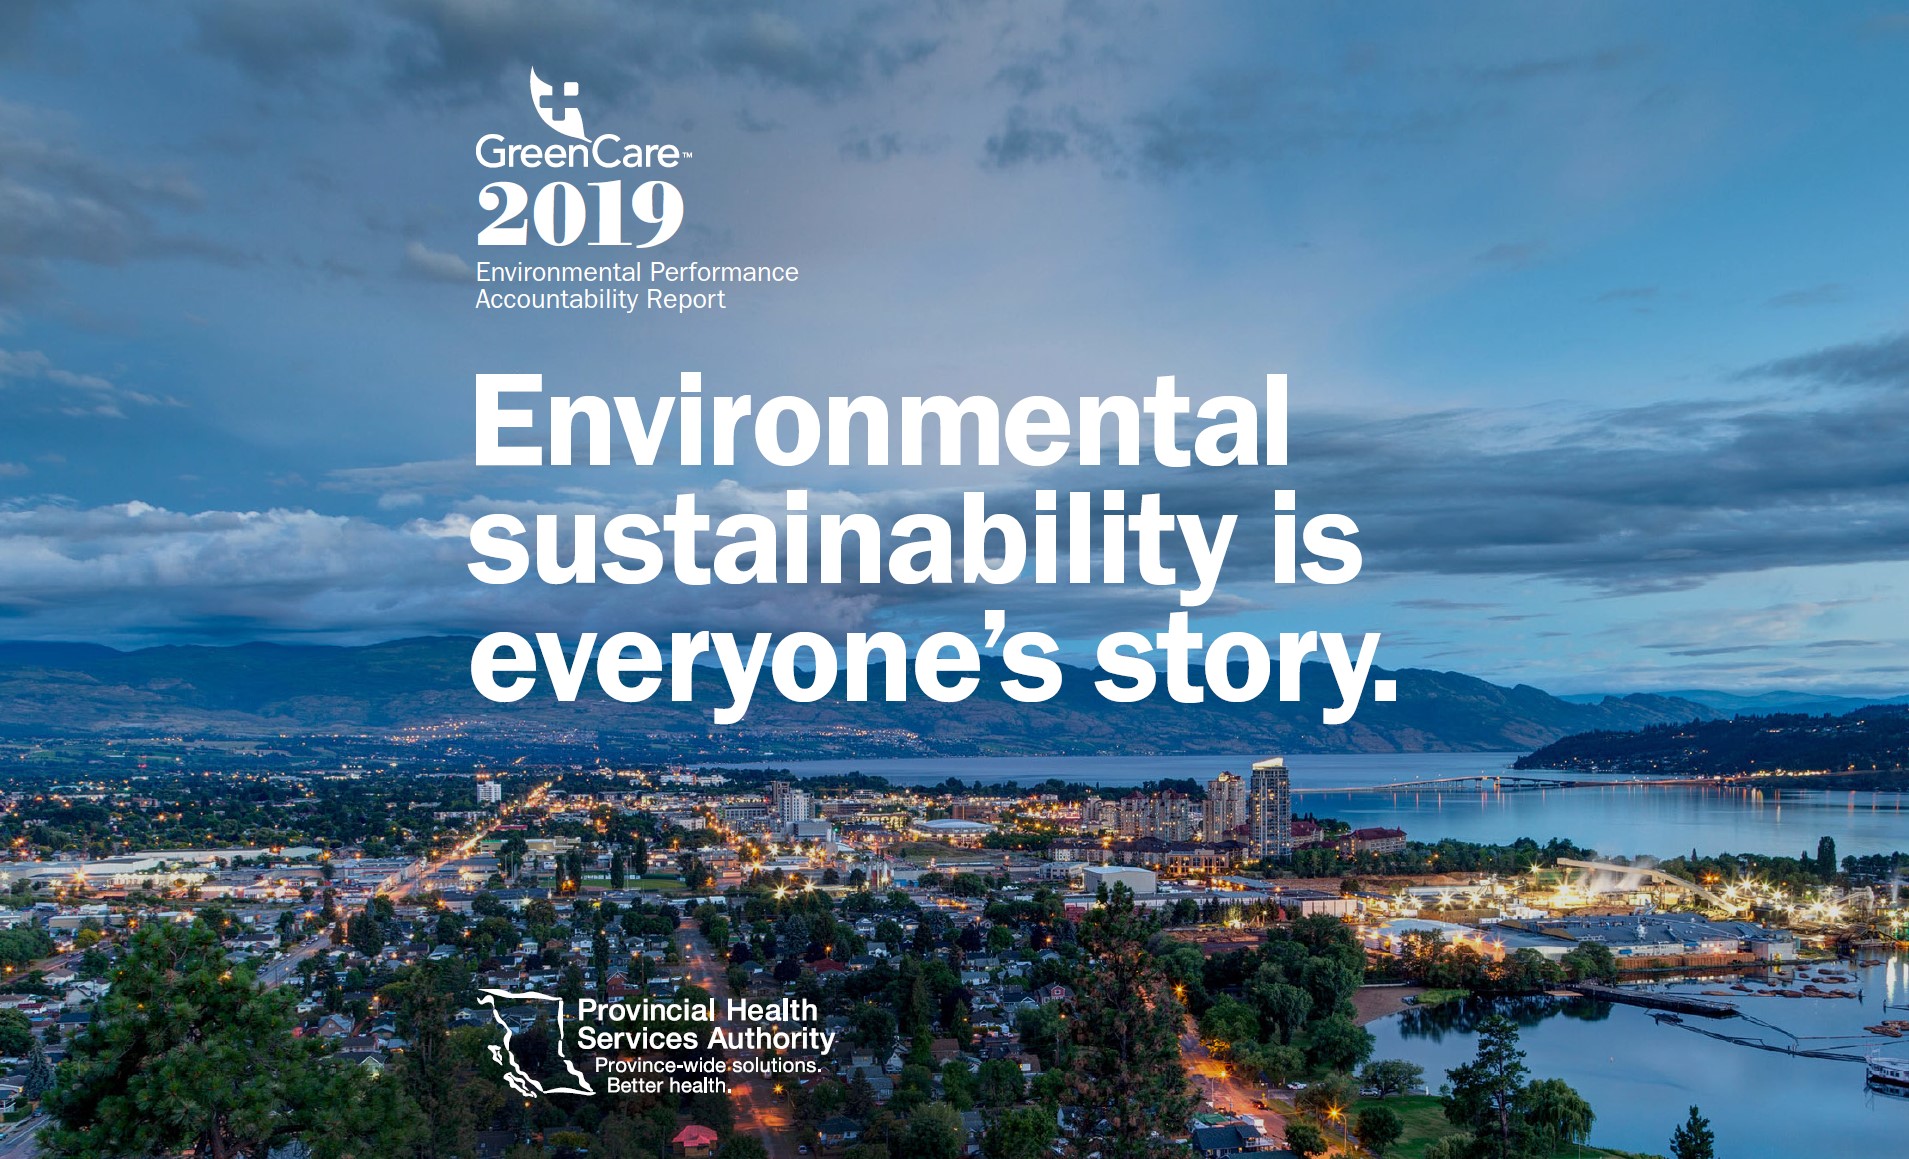 2019 Environmental Performance Accountability Report for PHSA